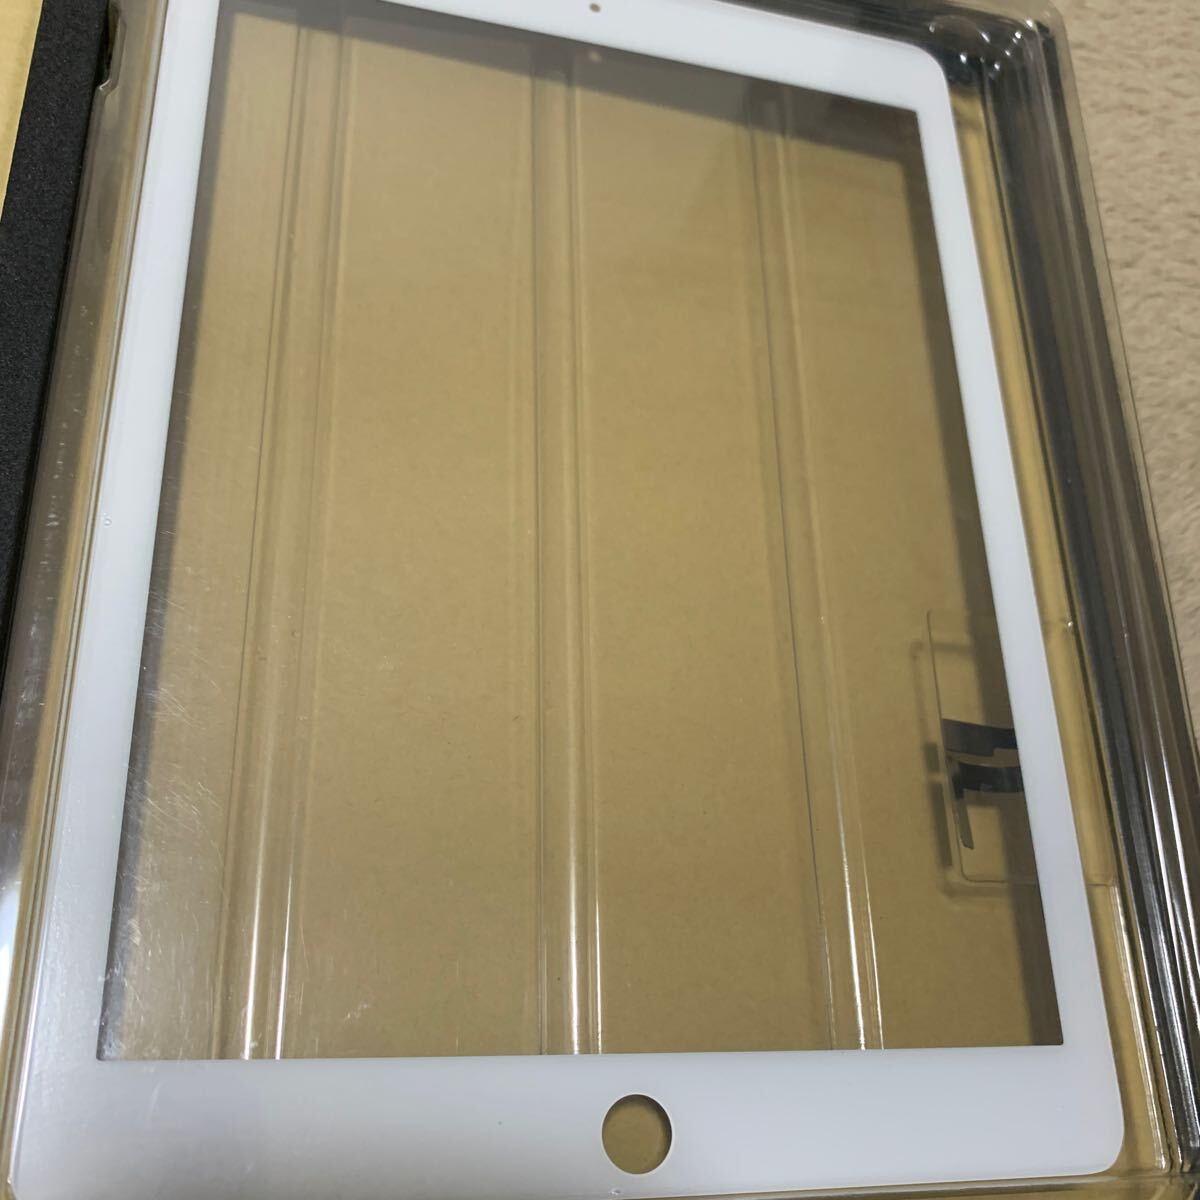 604t2943☆ A-MIND for iPad AIR2 交換修理用タッチパネル,フロントガラス取り付けテープ付属 + 画面保護フィルム +修理パーツ部品_画像3